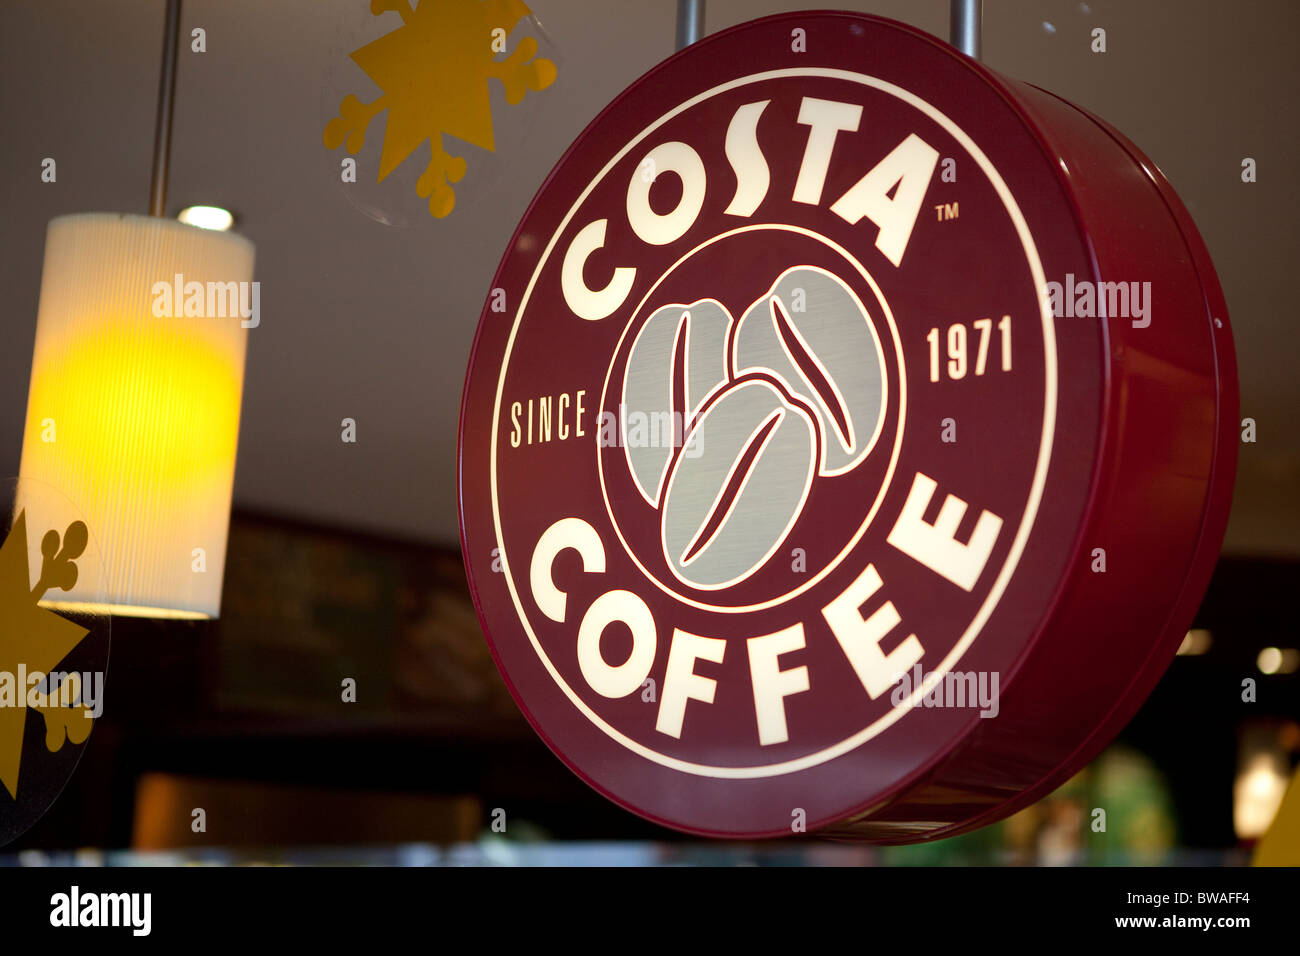 Costa coffee shop Stock Photo